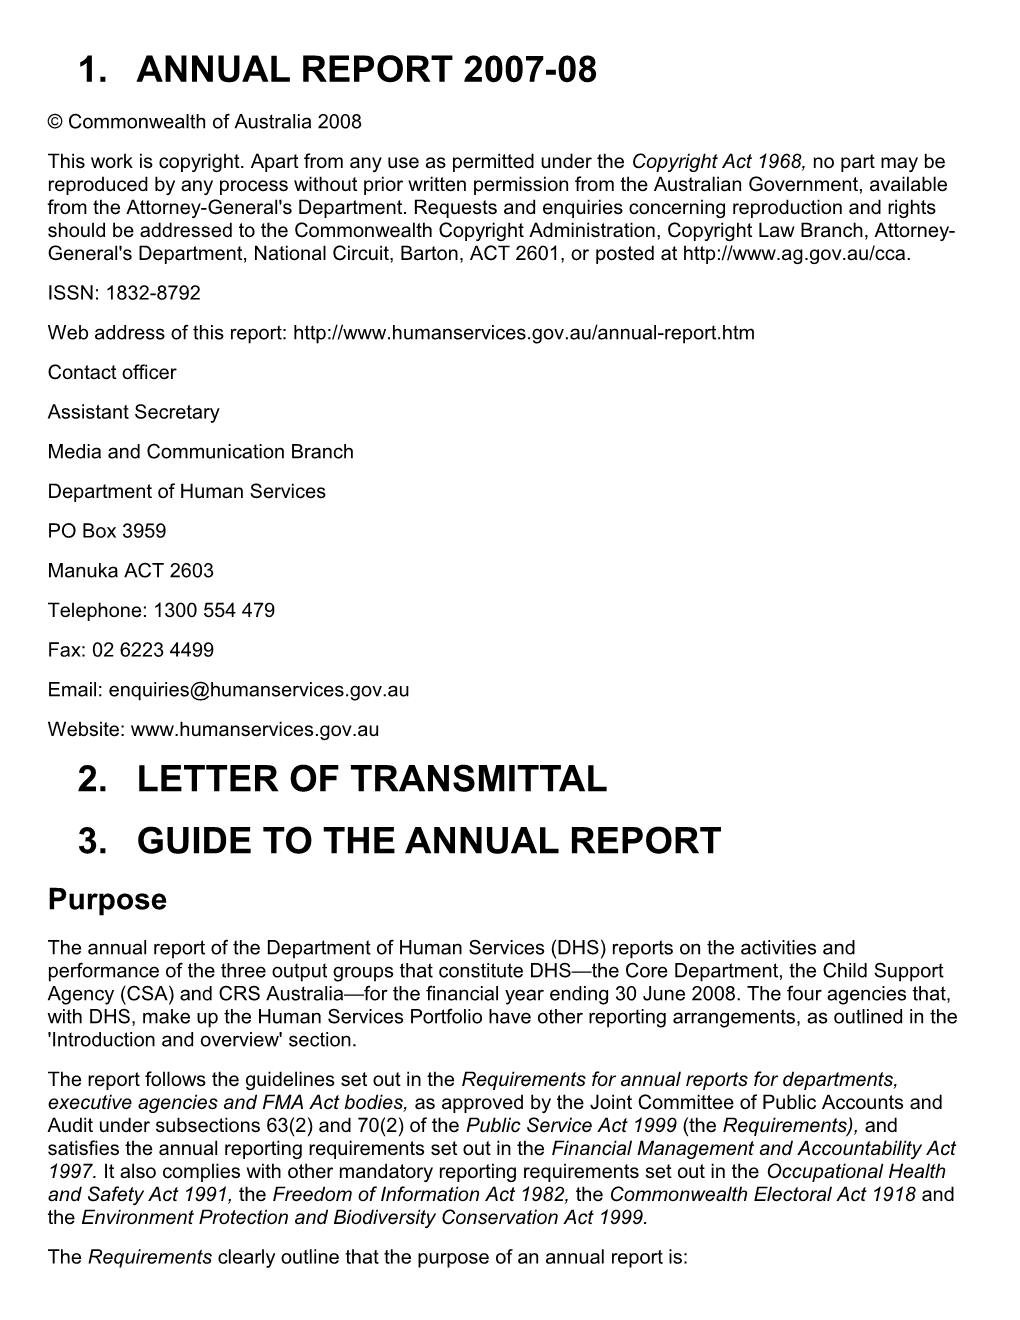 DHS Annual Report 2007-08 - Full Report